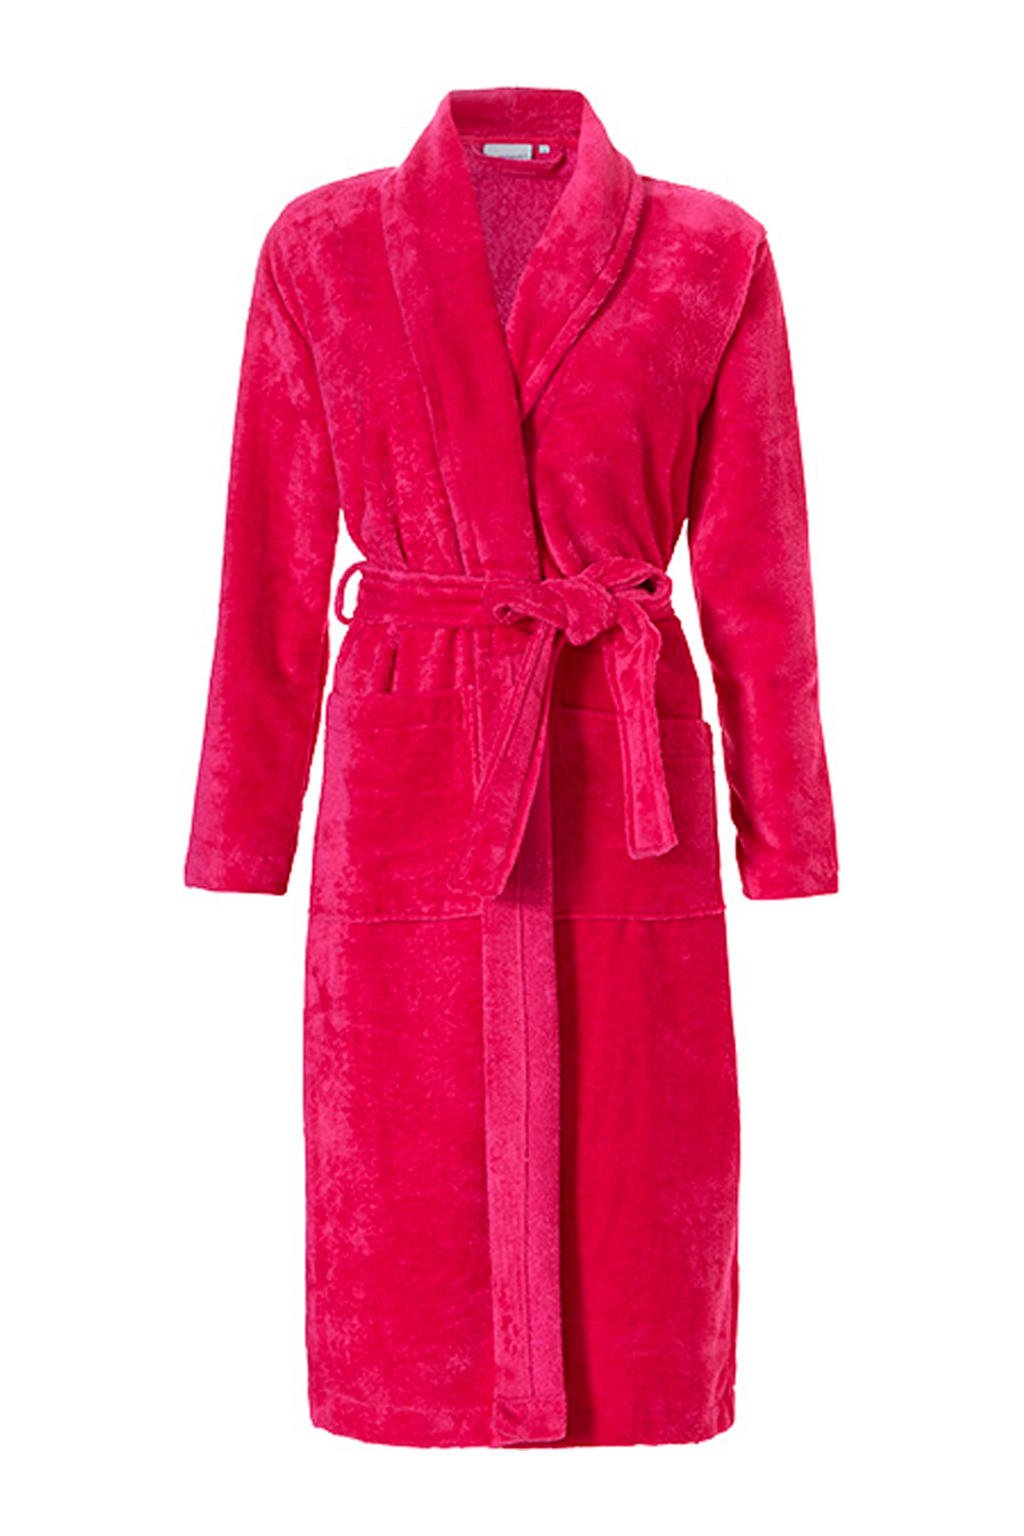 Pastunette badstof badjas rood